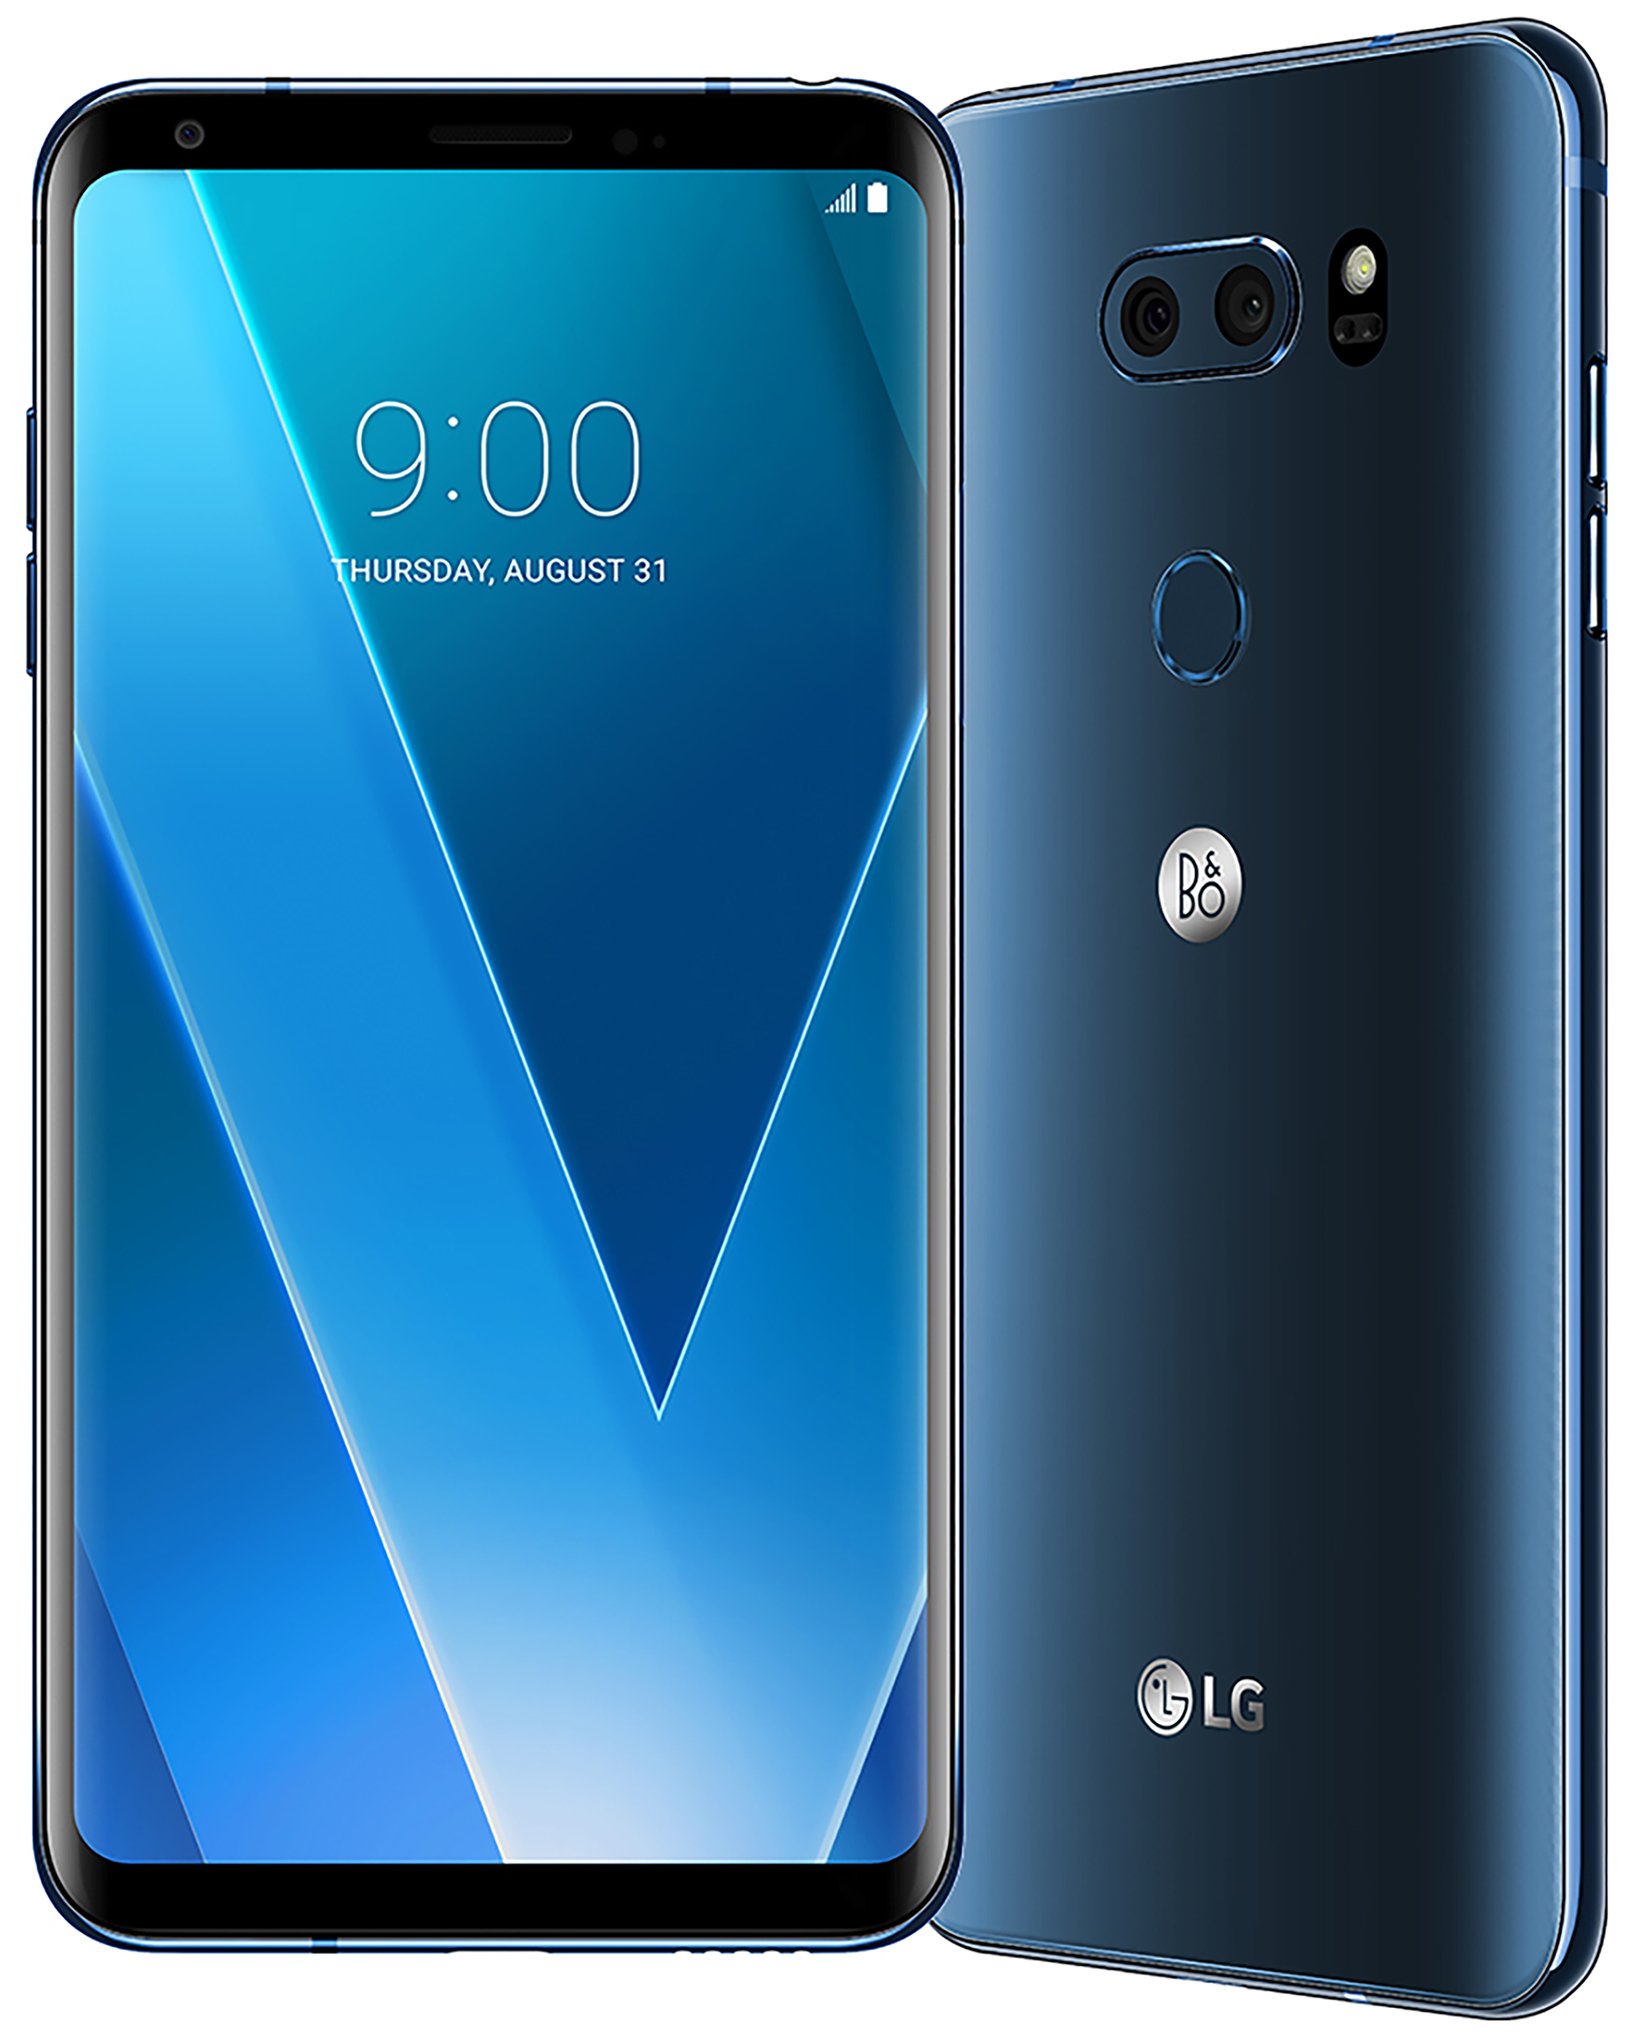 LG-V30-official-images (17).jpg